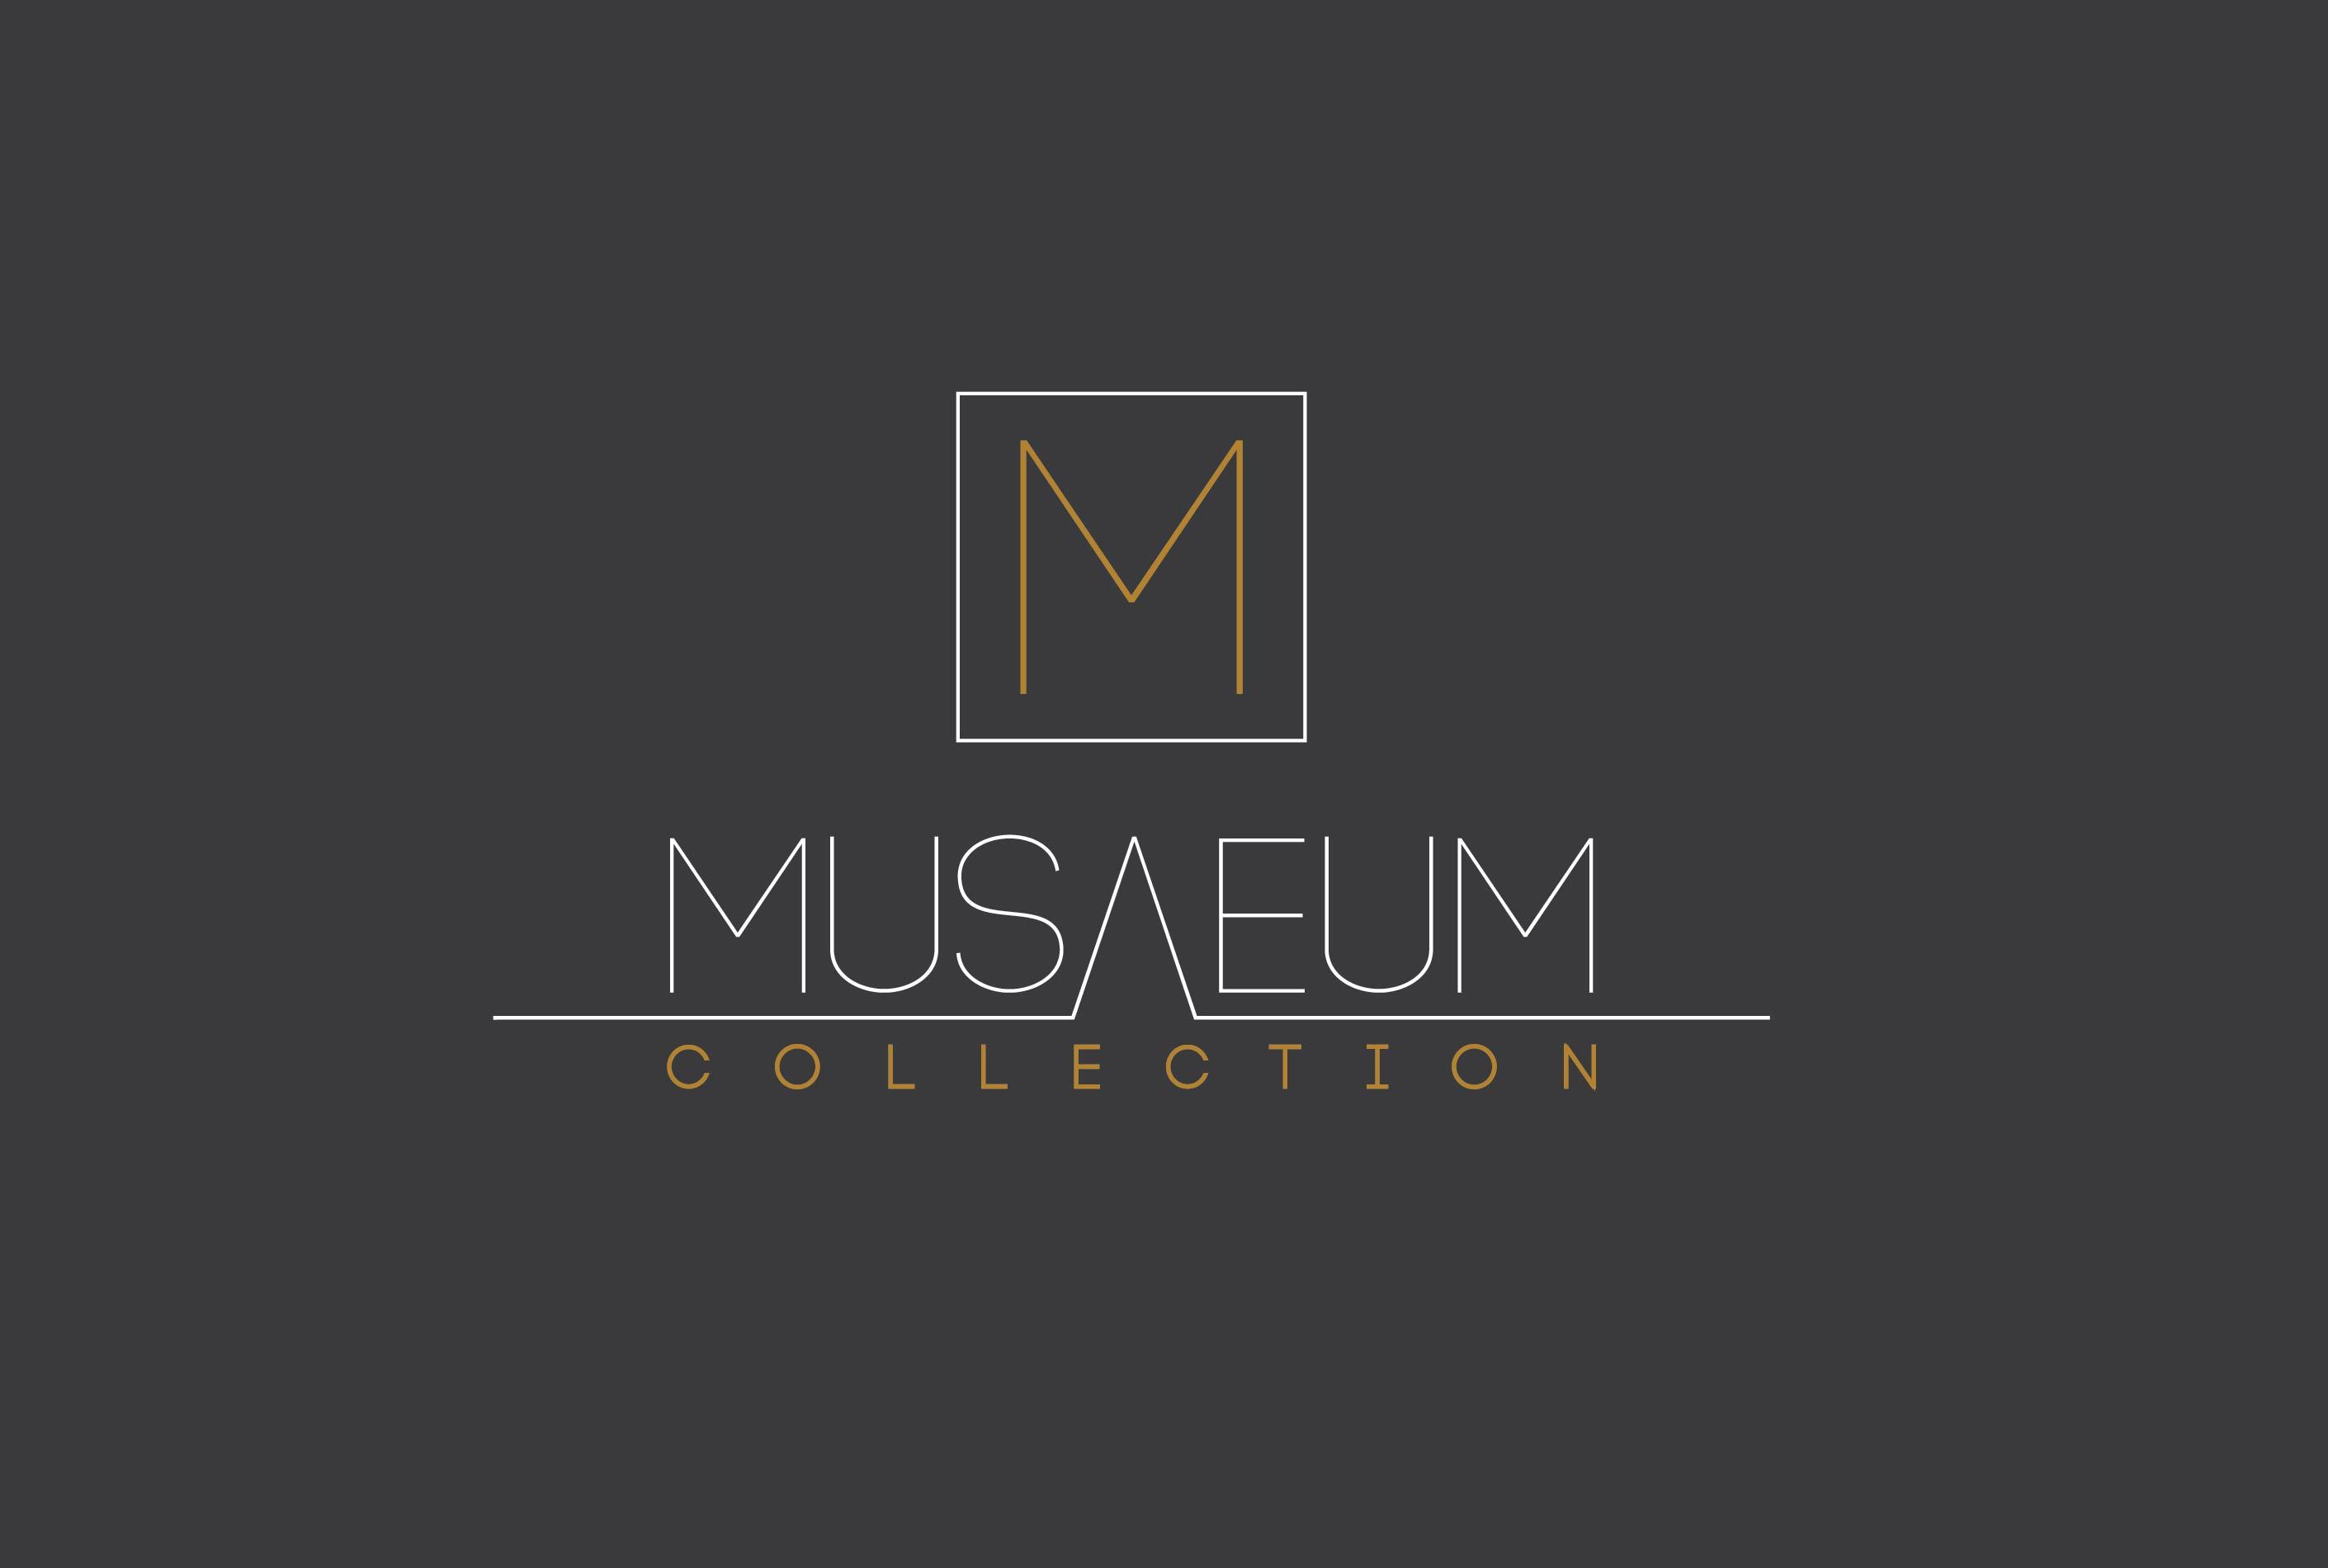 Upscale Logo - logo for “Musaeum Collection” | Sarah Decker